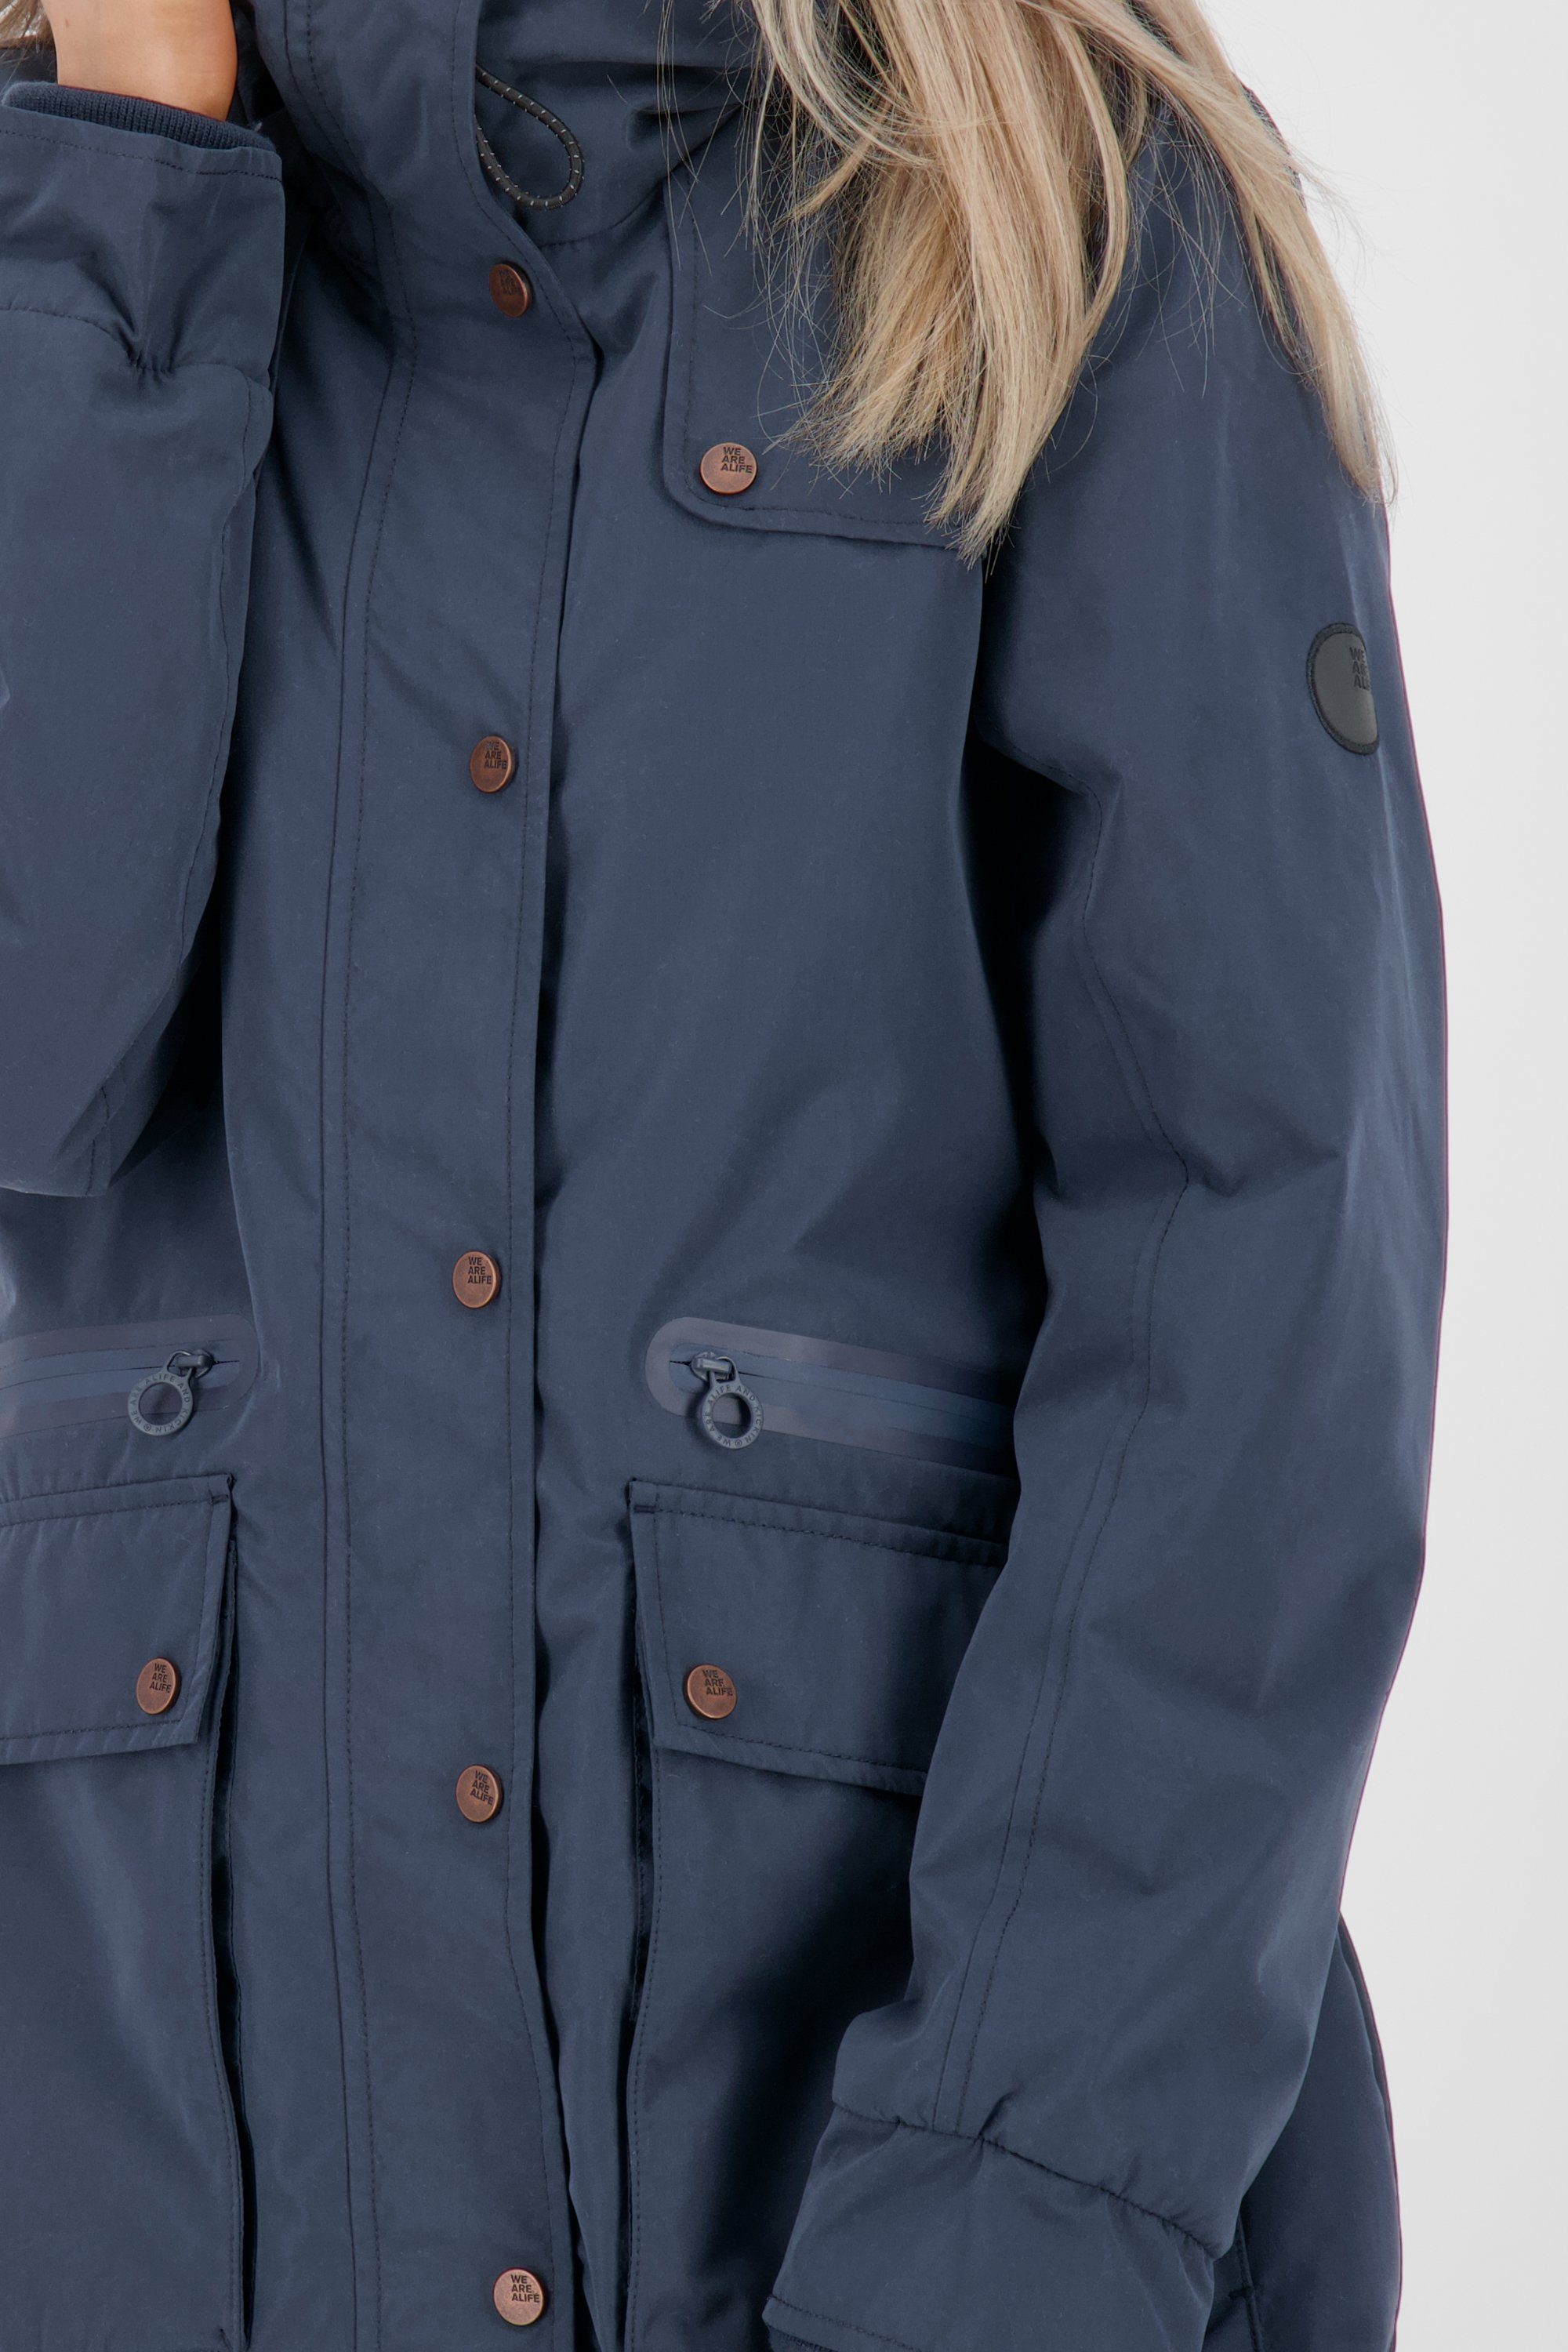 Alife & CharlotteAK Sommerjacke C marine Kickin Coat leichte Jacke, Damen Übergangsjacke